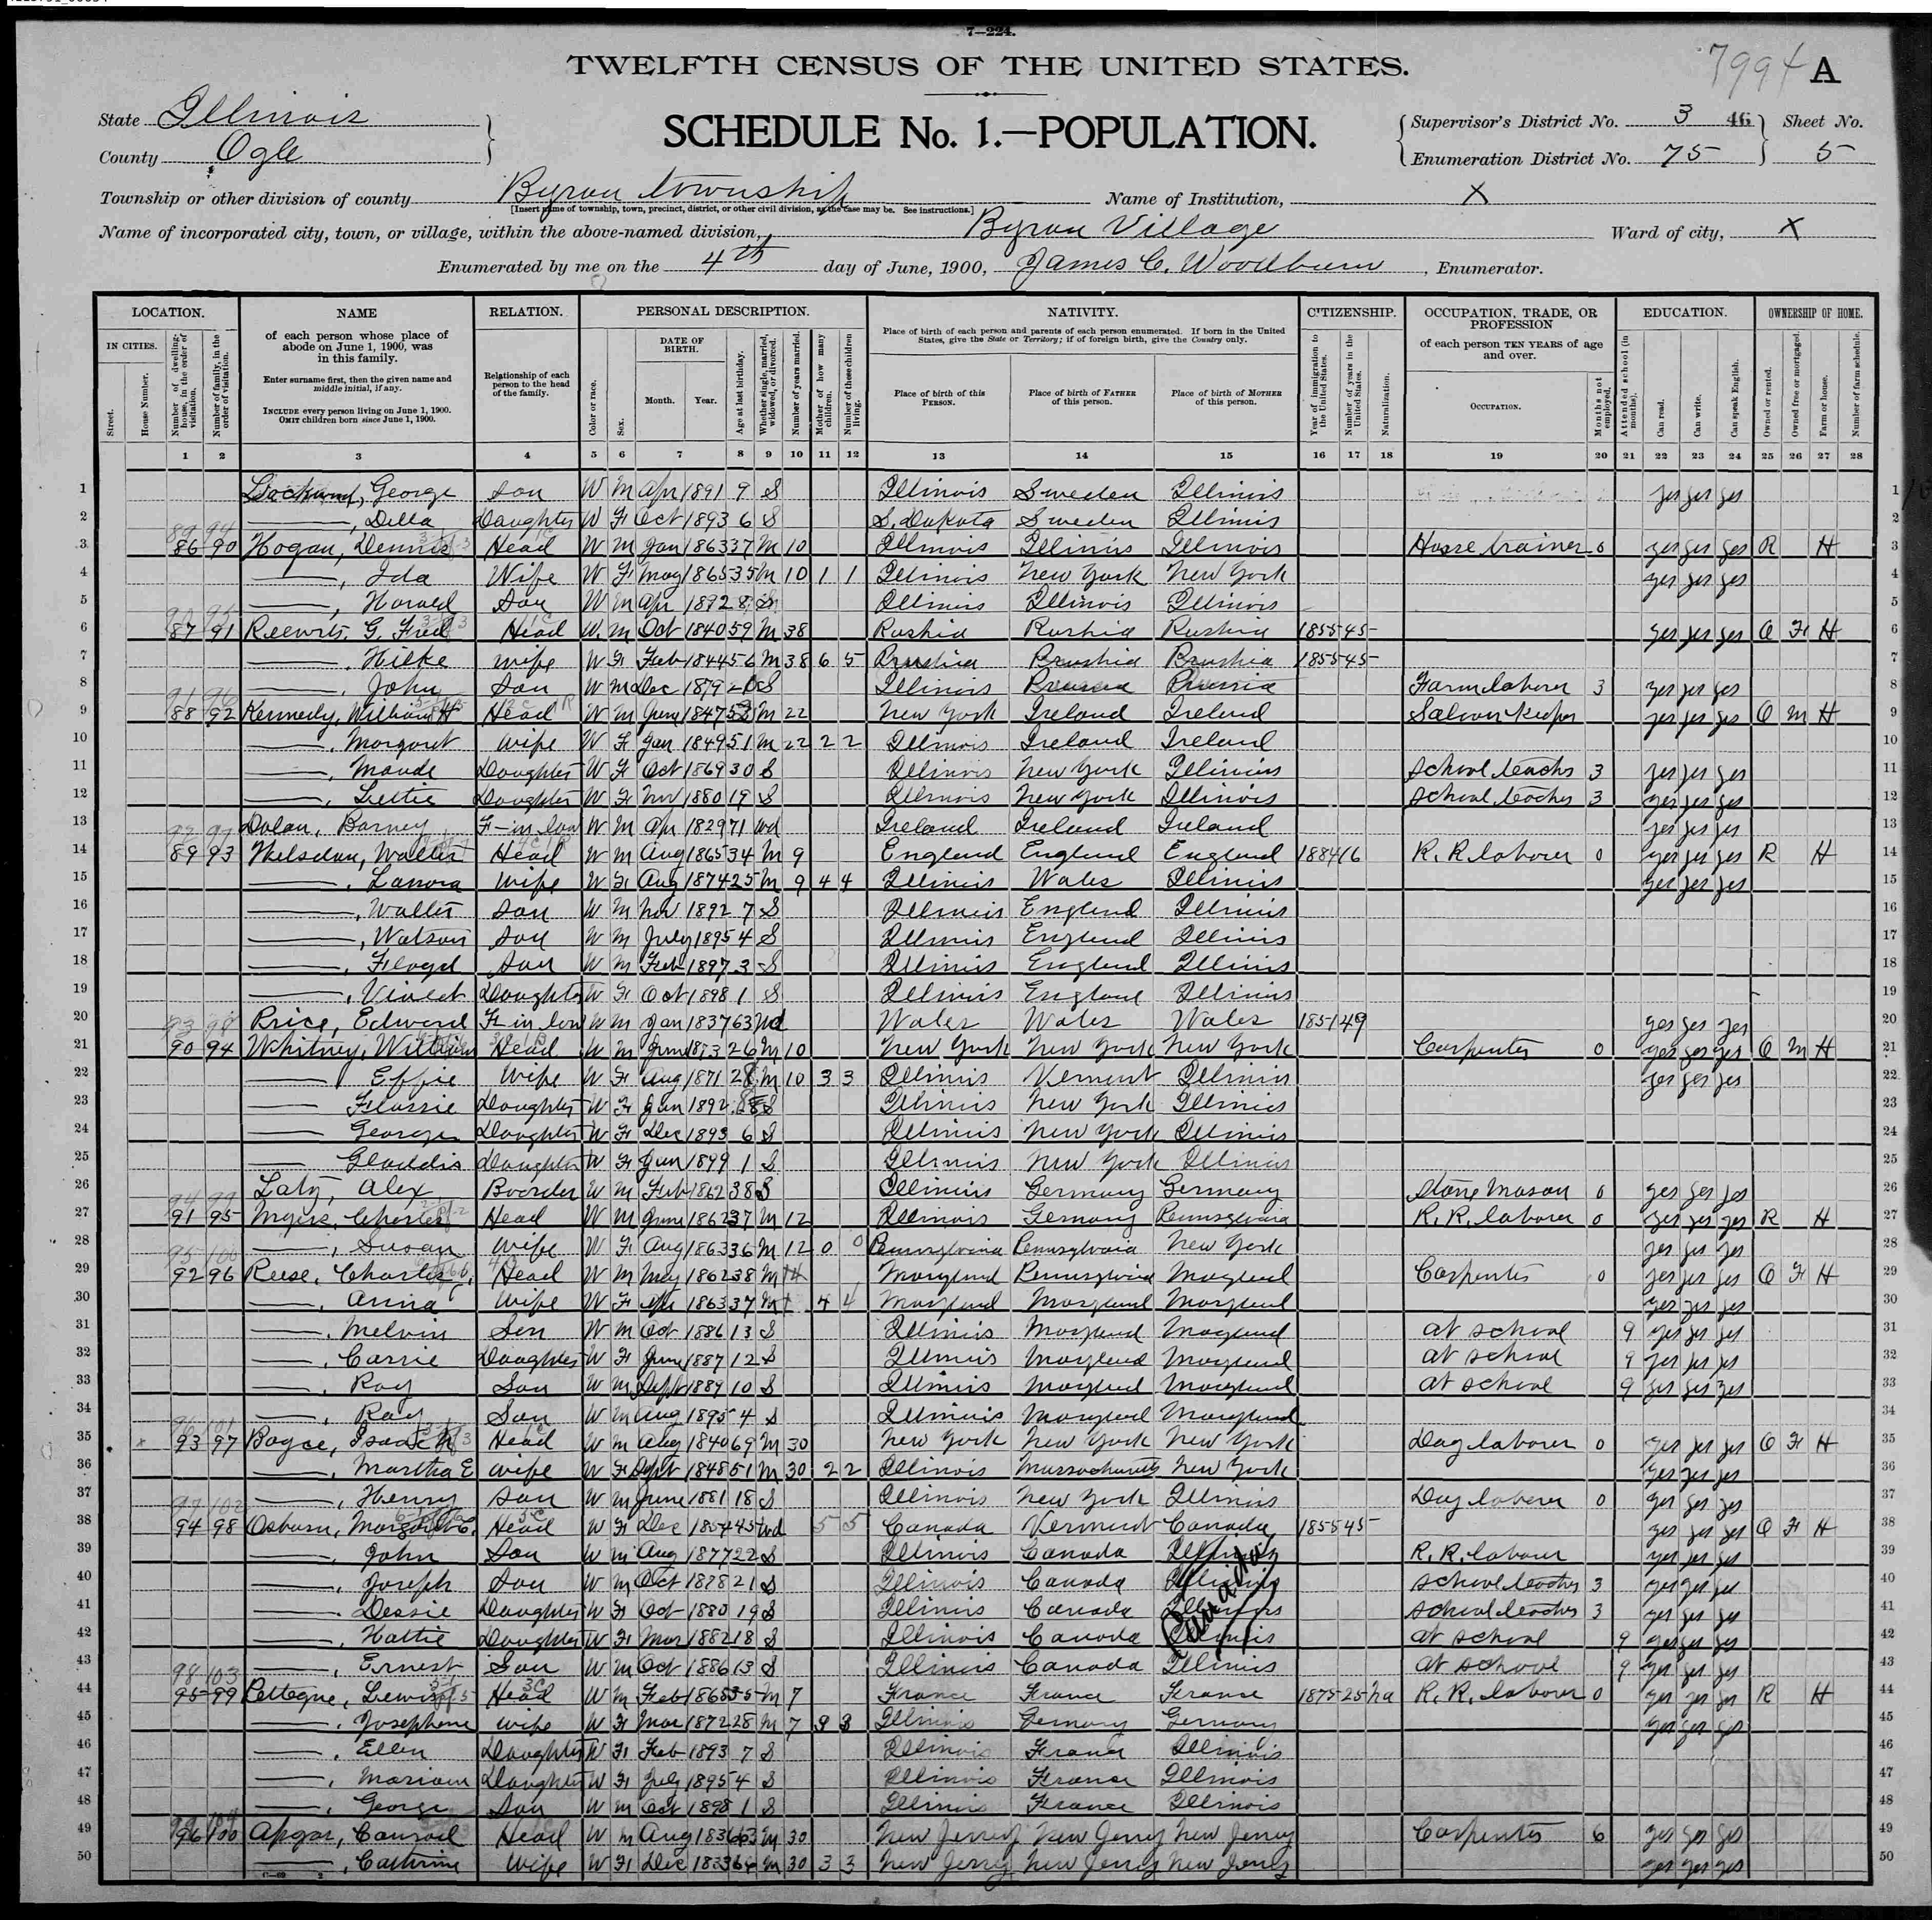 1900 census record image.jpg